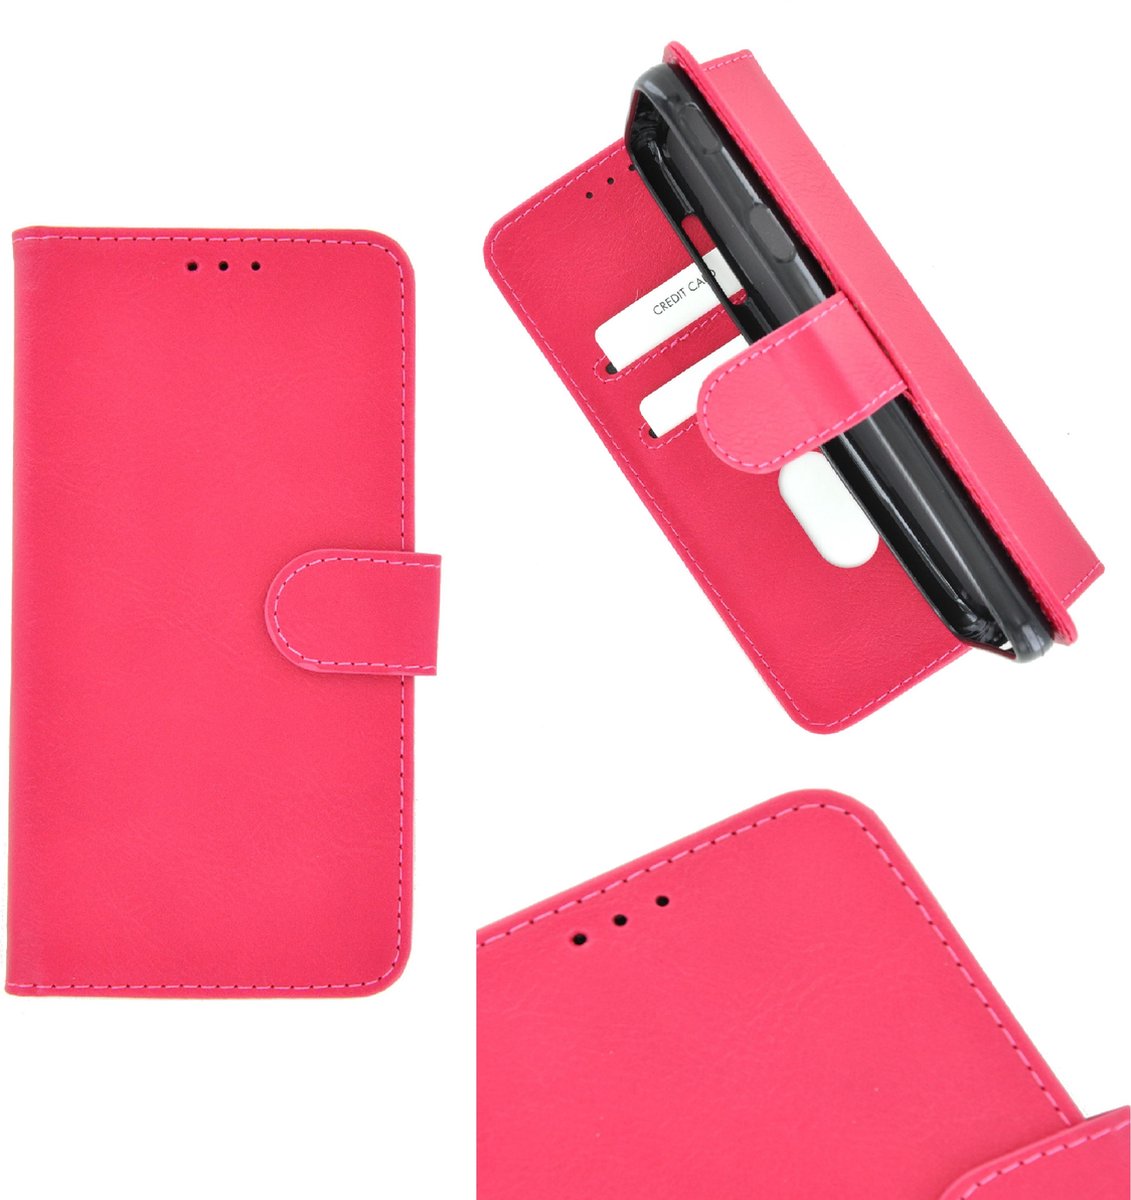 Sony Xperia E5 smartphone hoesje book style wallet case roze | bol.com